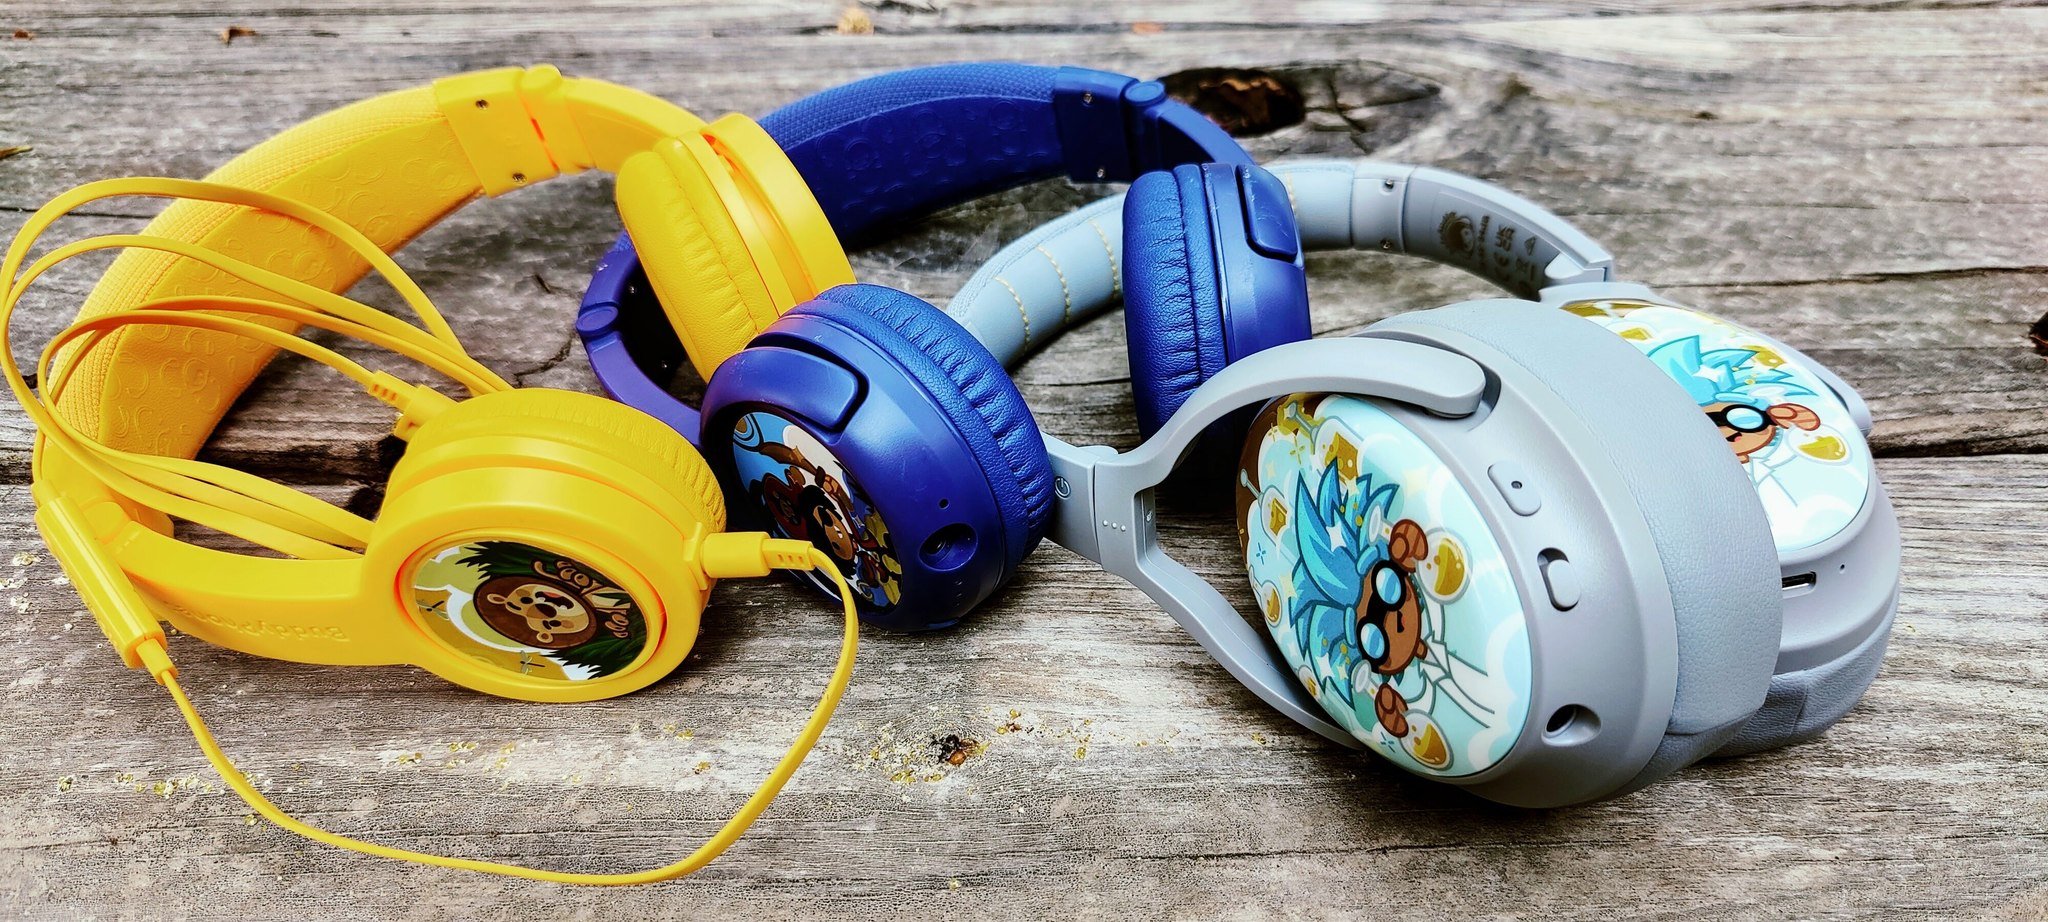 BuddyPhones Discover Fun, On-Ear Wired 85dB Safe Volume Limiting Kids  Headphones, Fun Customizable Stickers, Adjustable Headband Size, Blue 